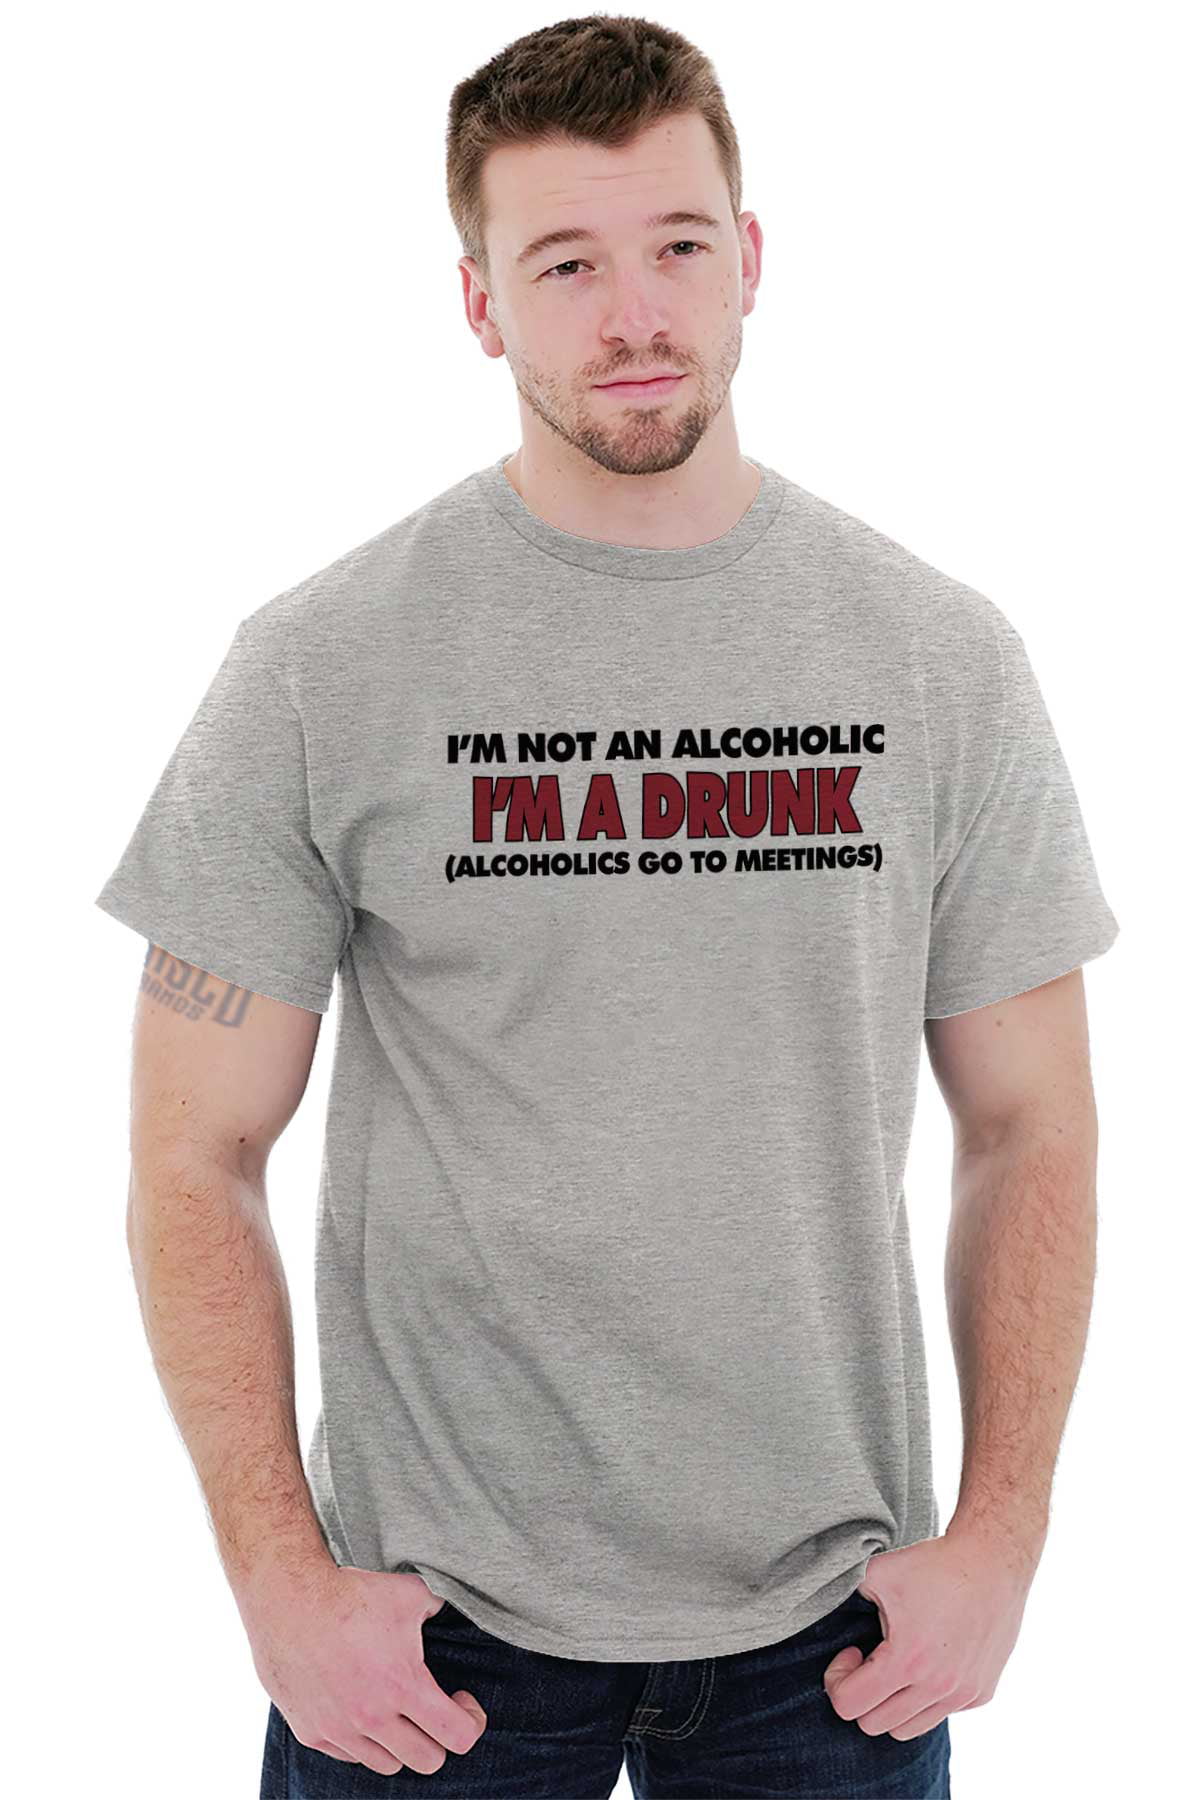 Alcoholic Drink Funny Humor Graphic T Shirt Men or Women Brisco Brands - Walmart.com